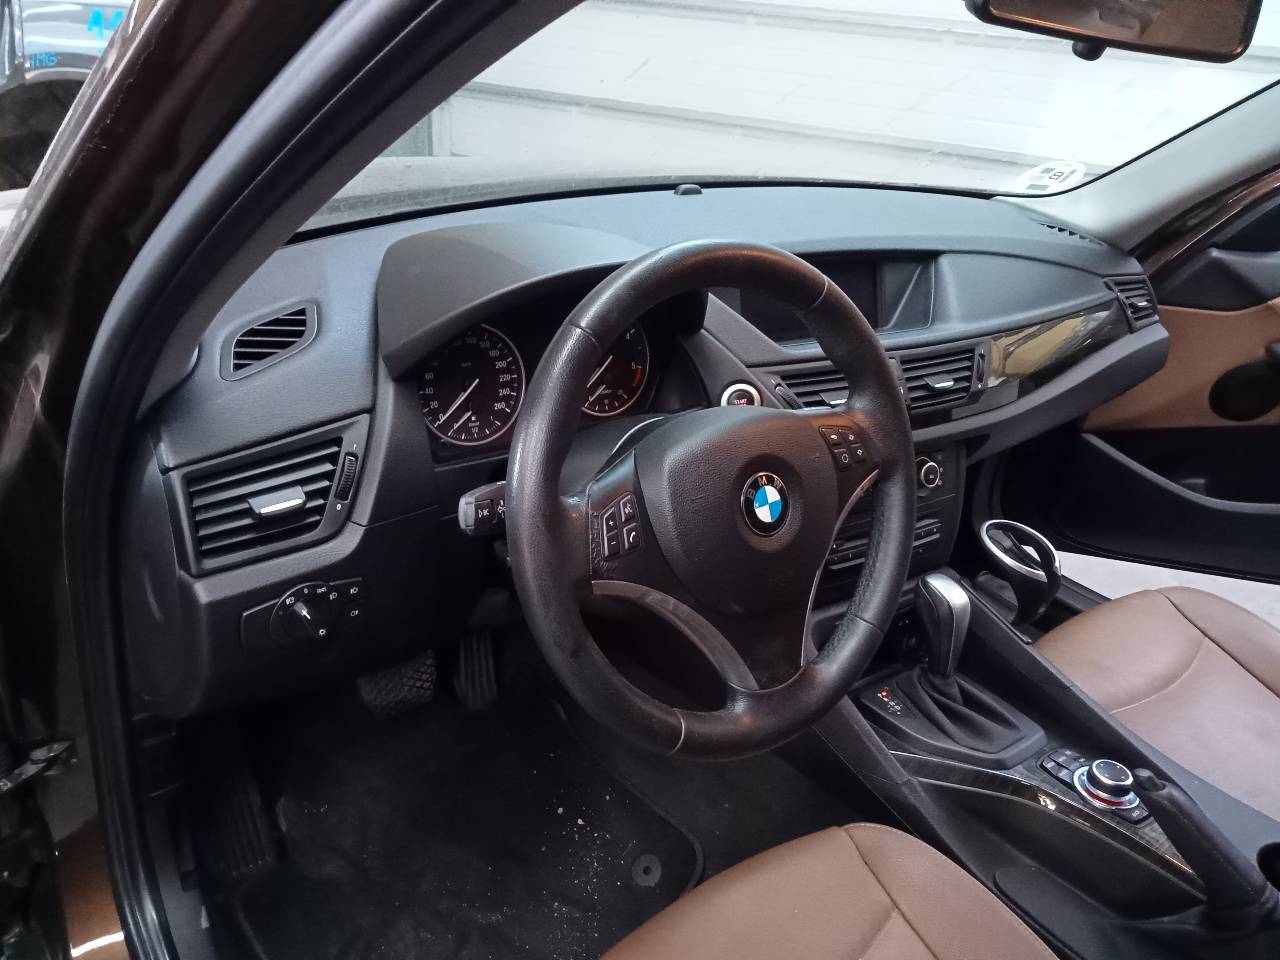 BMW X1 E84 (2009-2015) Rear Differential 23302629